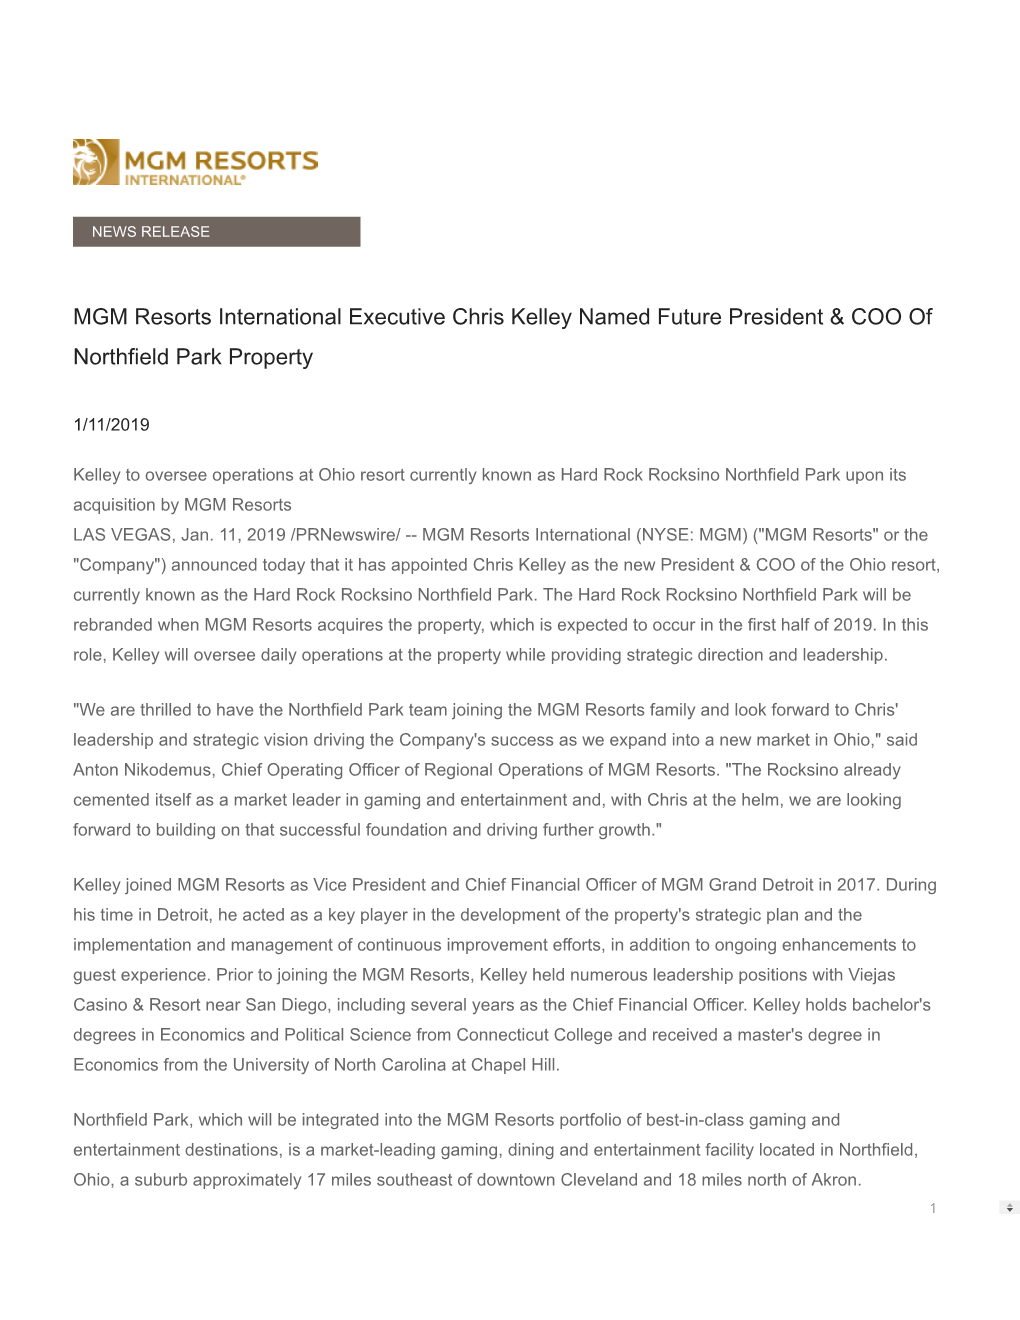 MGM Resorts International Executive Chris Kelley Named Future President & COO of Northfield Park Property